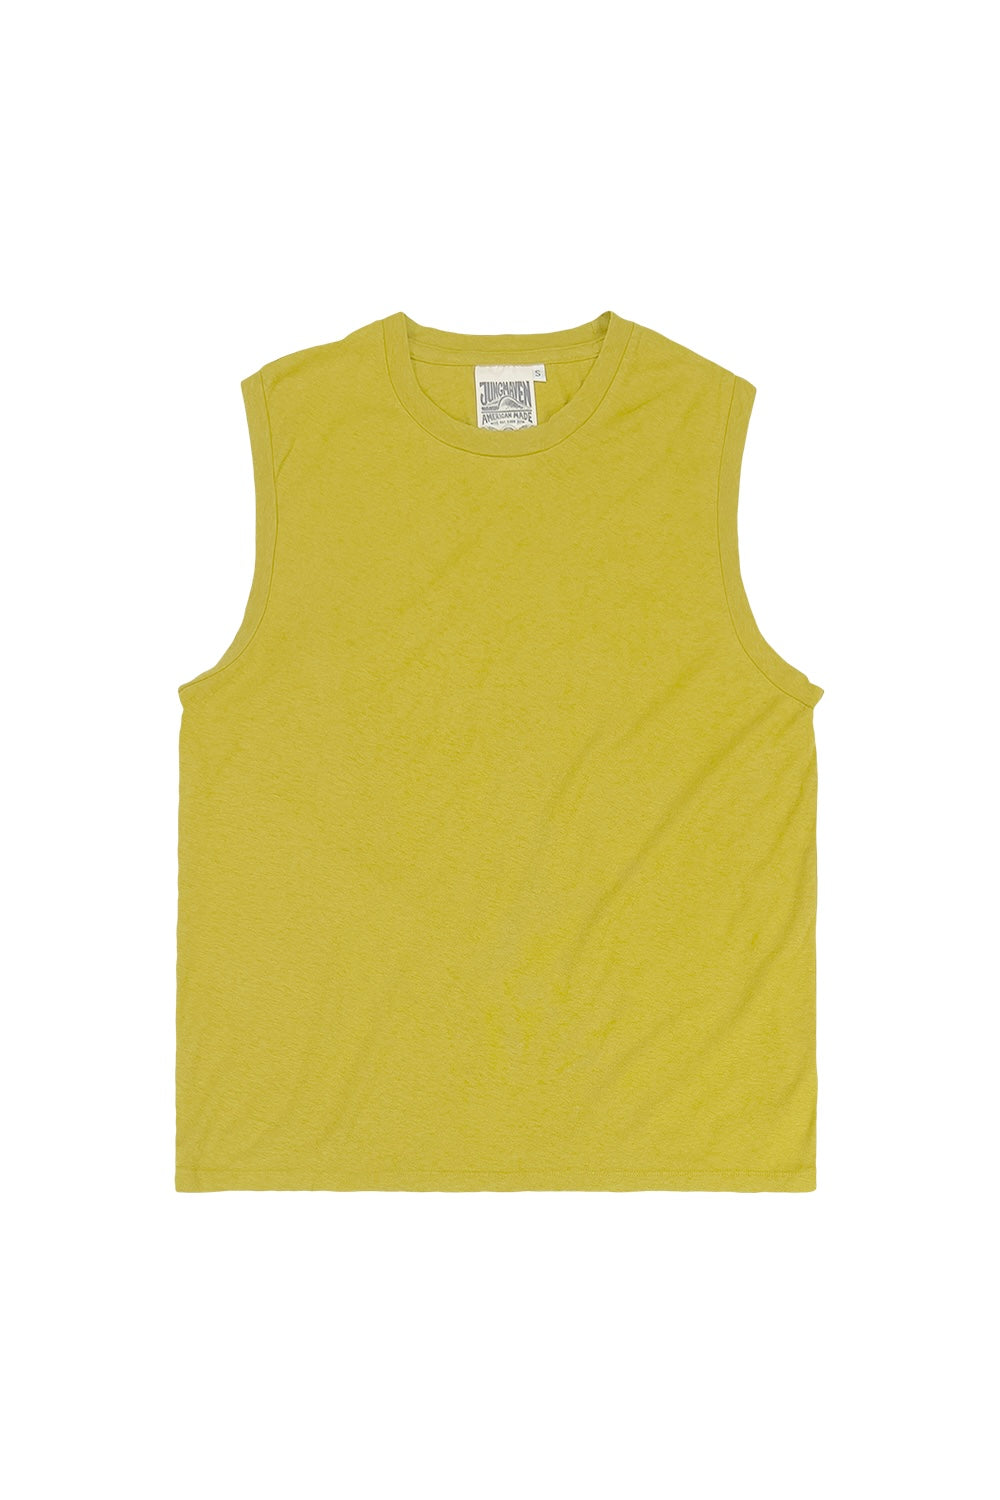 Malibu Muscle Tee | Jungmaven Hemp Clothing & Accessories / Color: Citrine Yellow